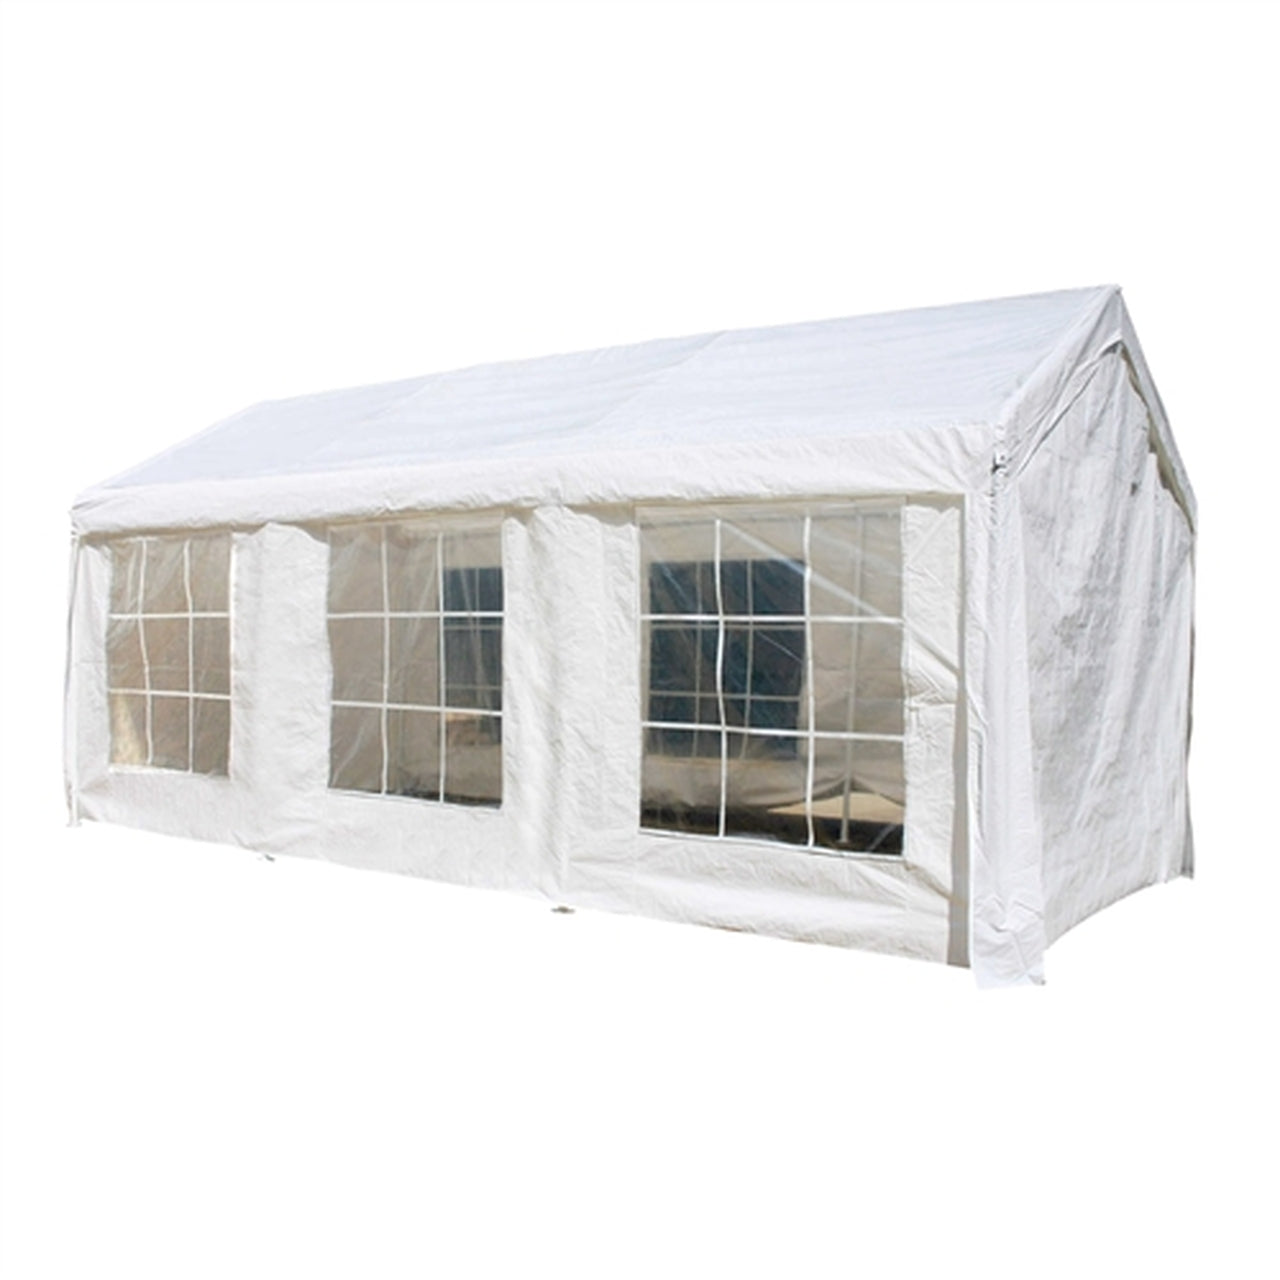 Aleko Carports Heavy Duty Outdoor Canopy Tent with Sidewalls